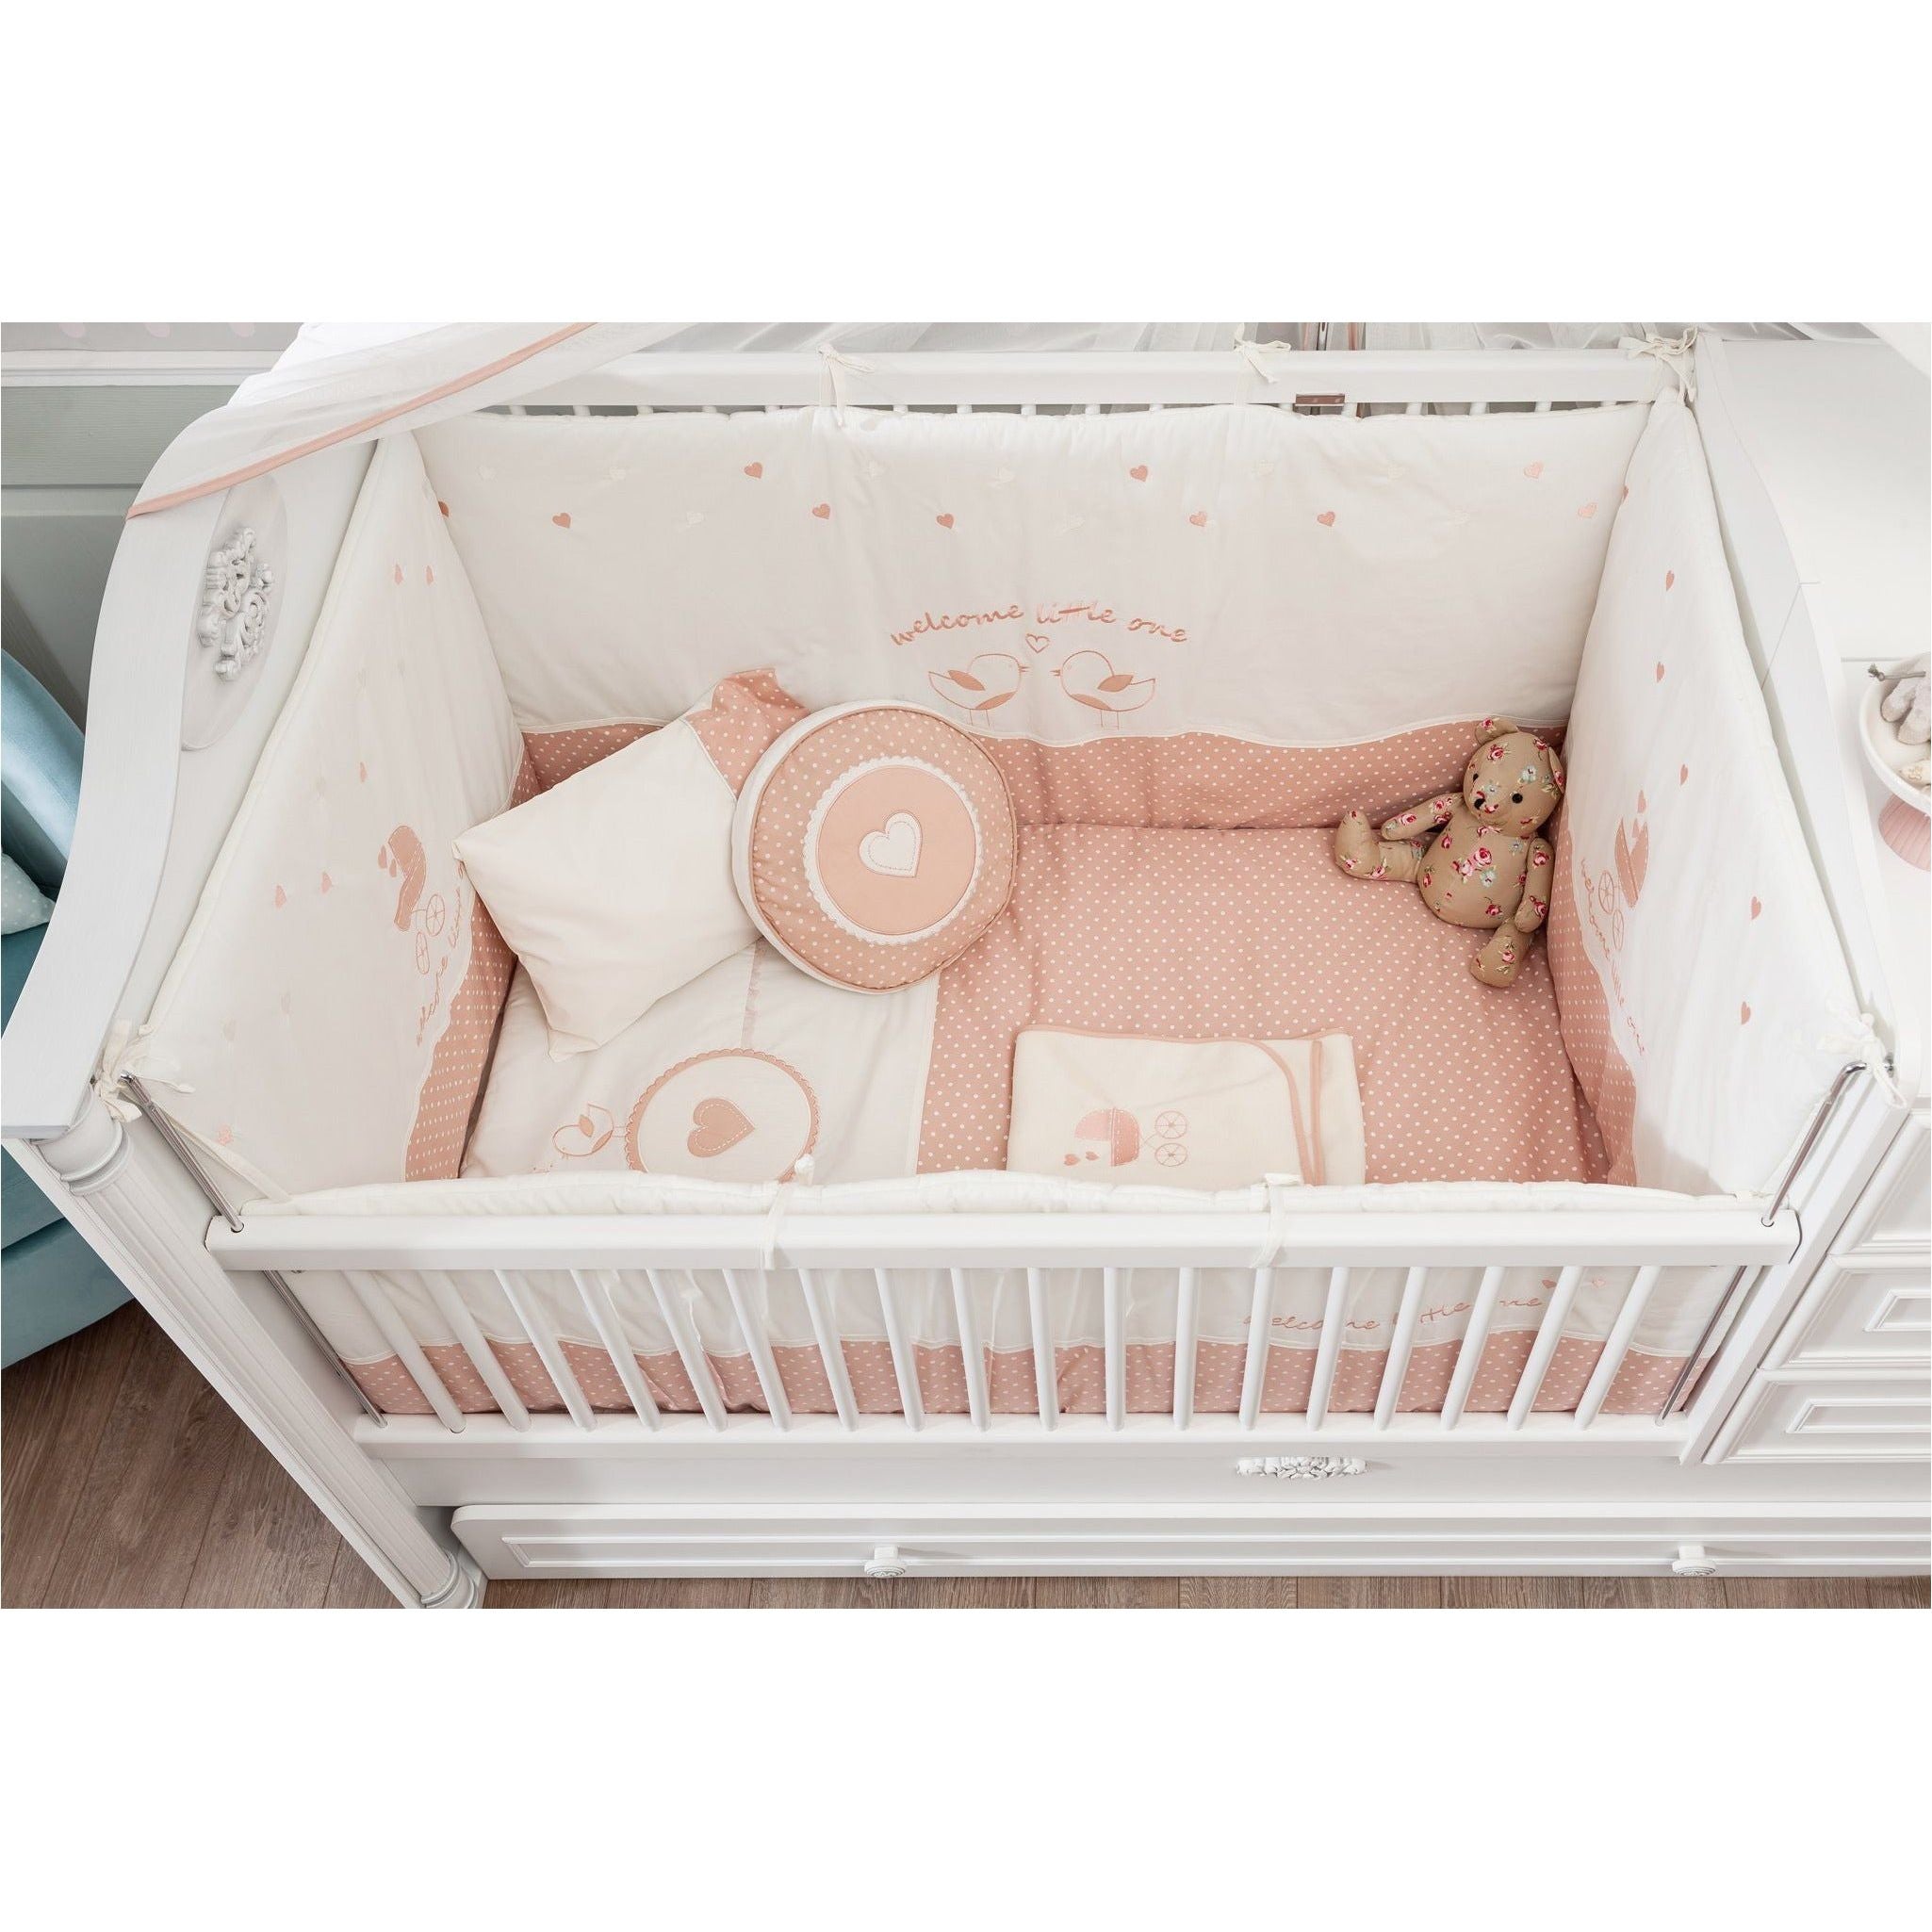 Romantic Baby Bedding Set (80X130 Cm) | Little Baby.